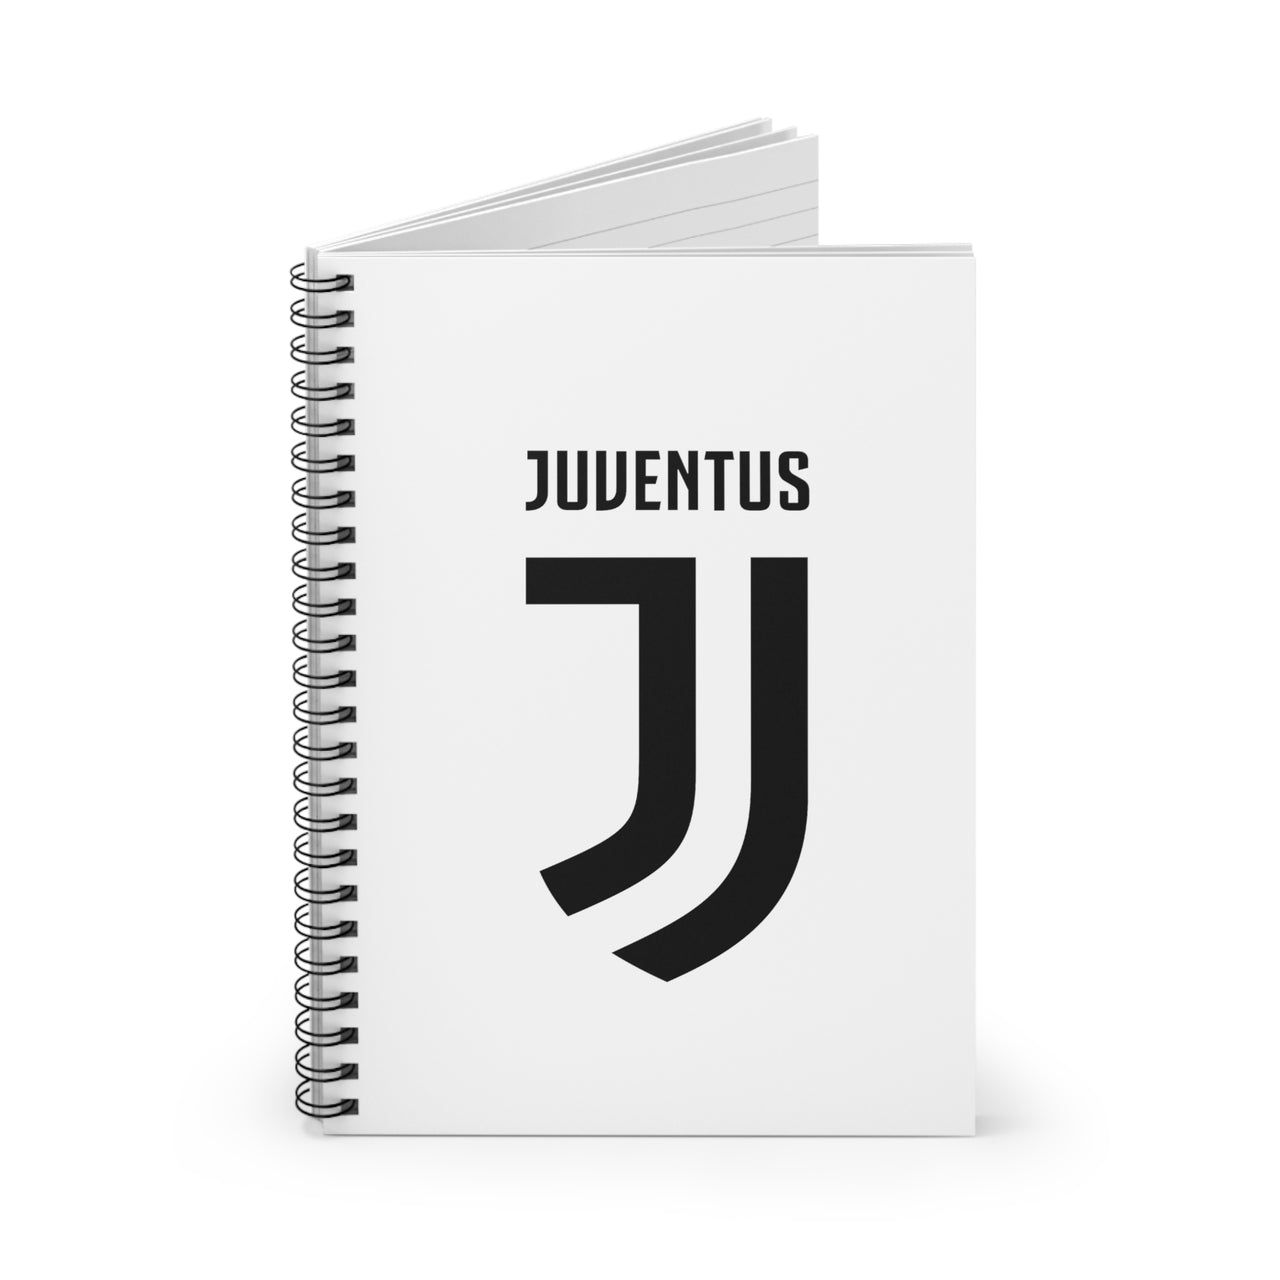 Juventus Spiral Notebook - Ruled Line